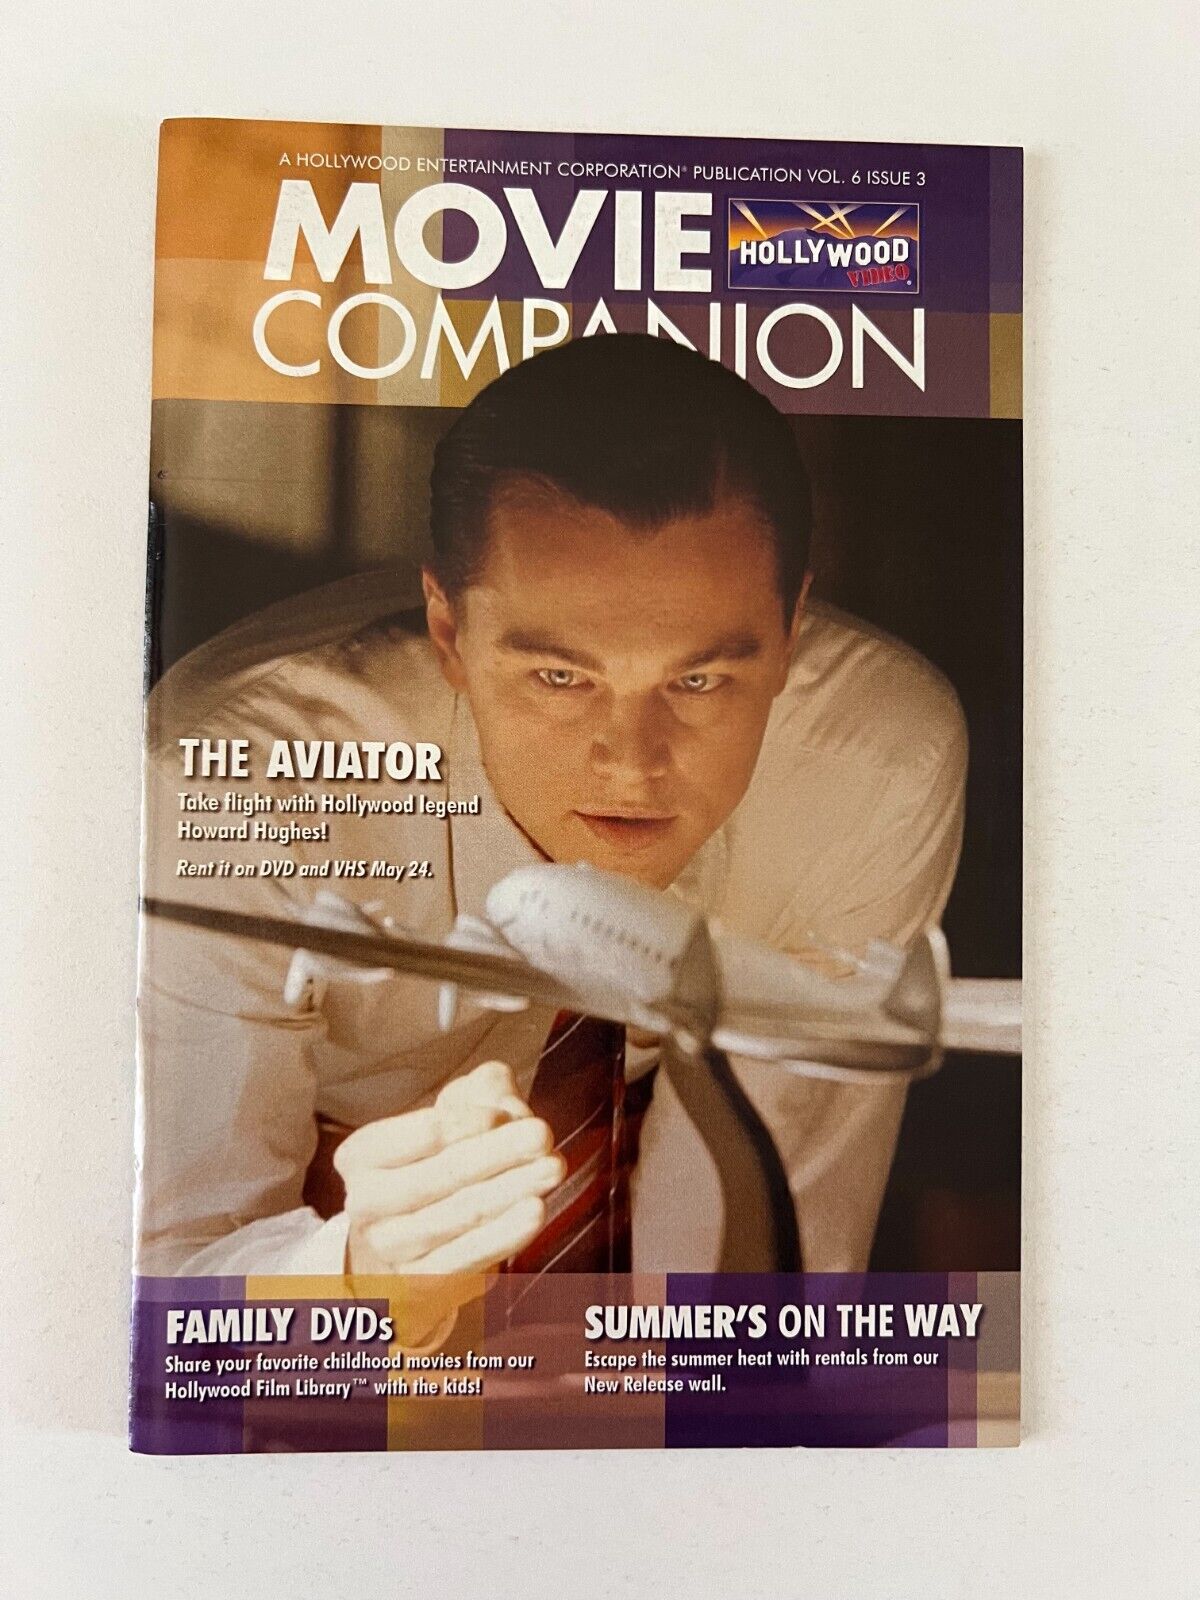 THE AVIATOR LEONARDO DICAPRIO Volume 6 Issue #3 Hollywood Video Movie Companion